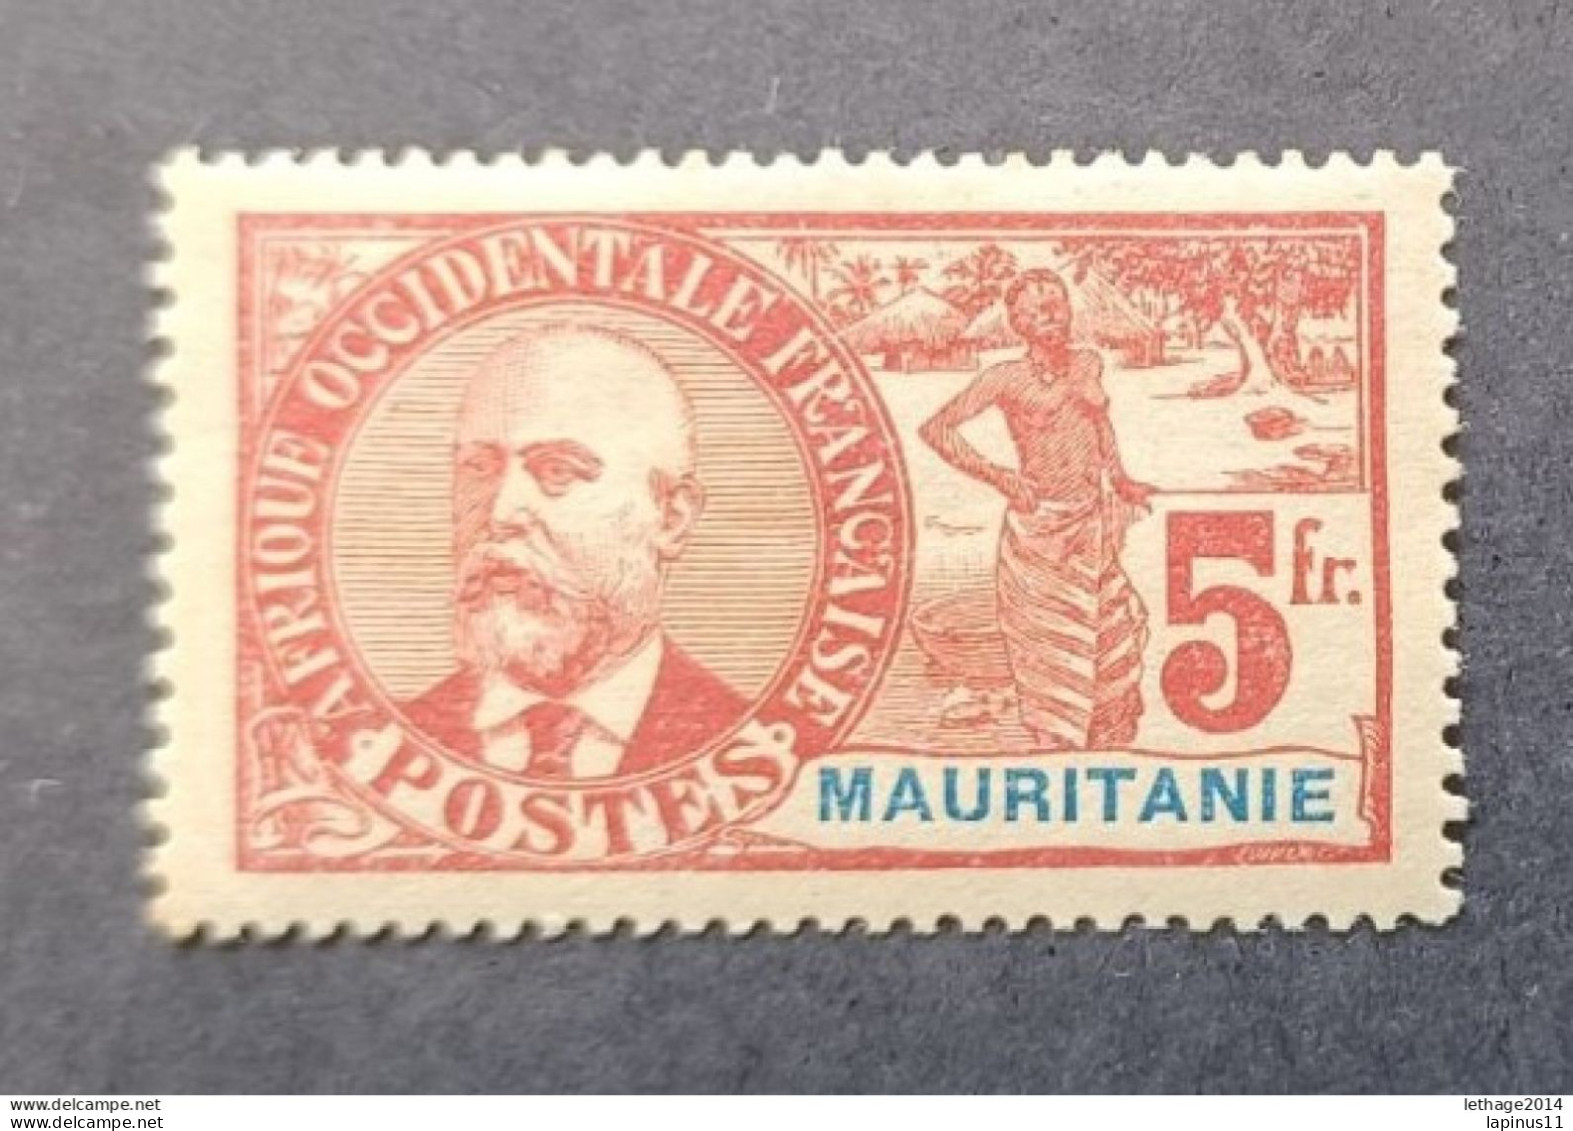 COLONIE FRANCE MAURITANIE 1906 GOUVERNEUR GENERAL NOEL EUGENE BALLAY MAURITANIE EN ROUGE CAT YVERT N 16 MNHL VERY RARE - Unused Stamps